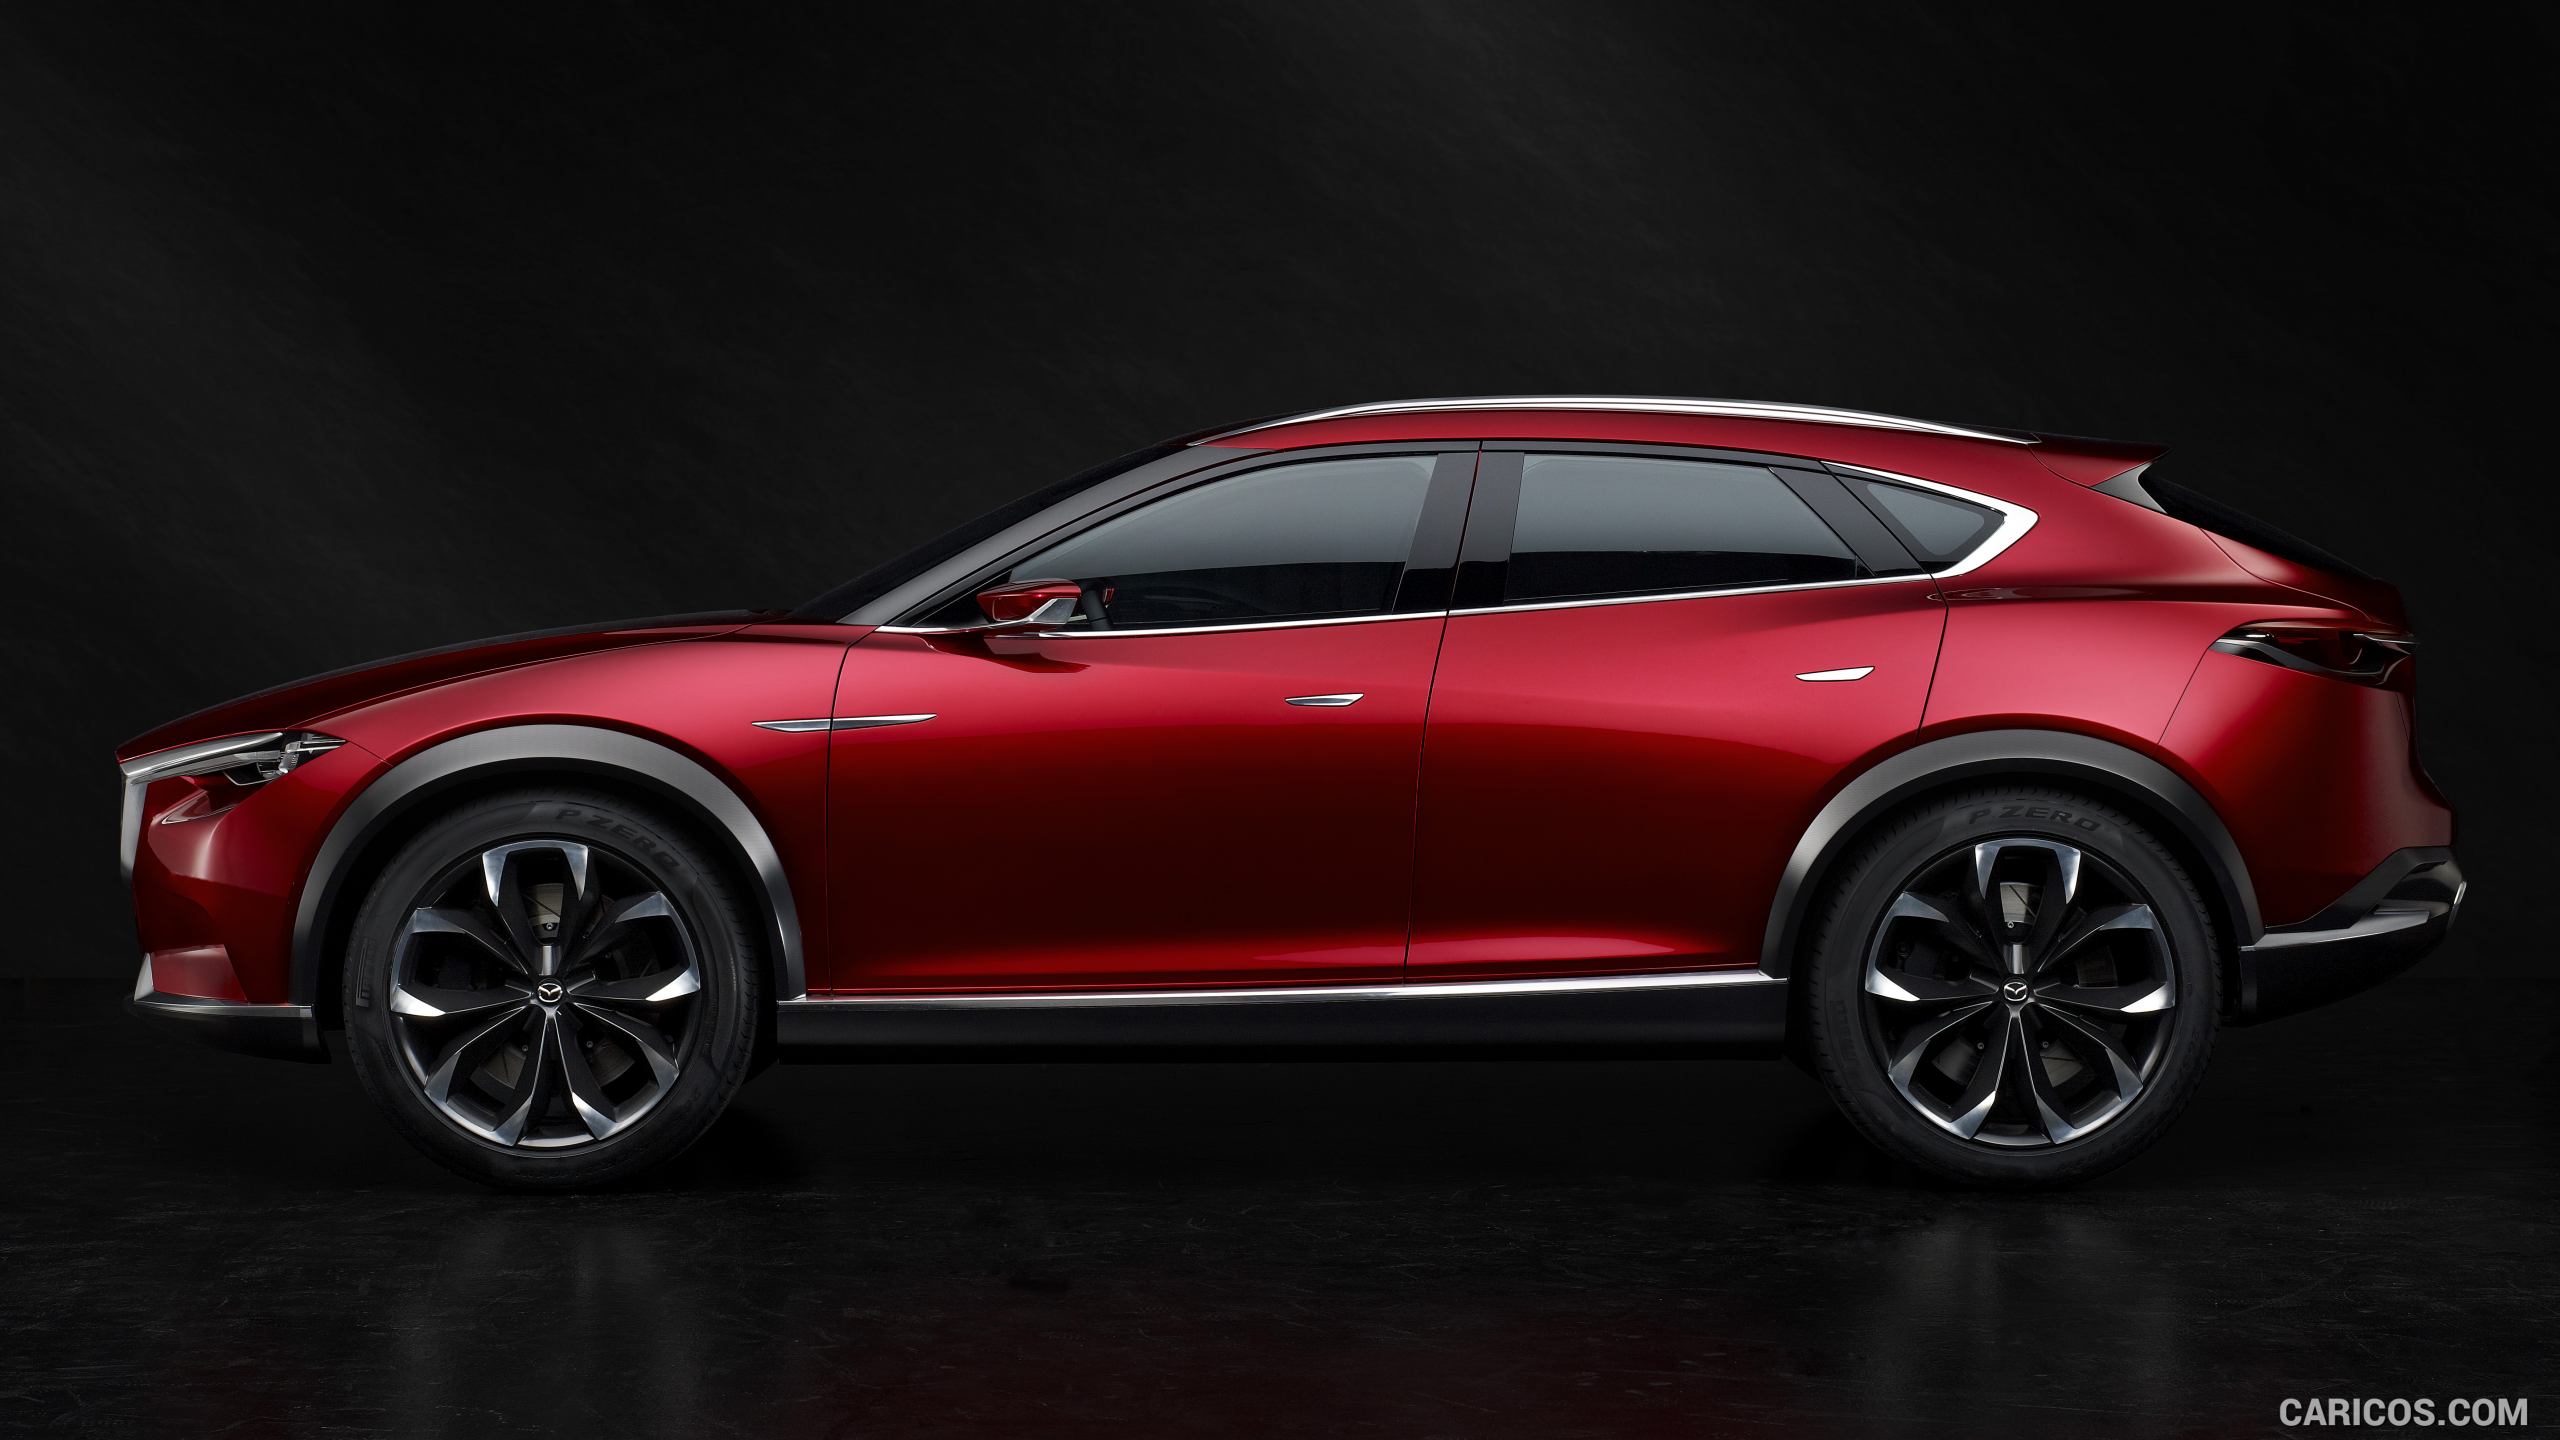 2015 Mazda Koeru Crossover Concept - Side, #9 of 17